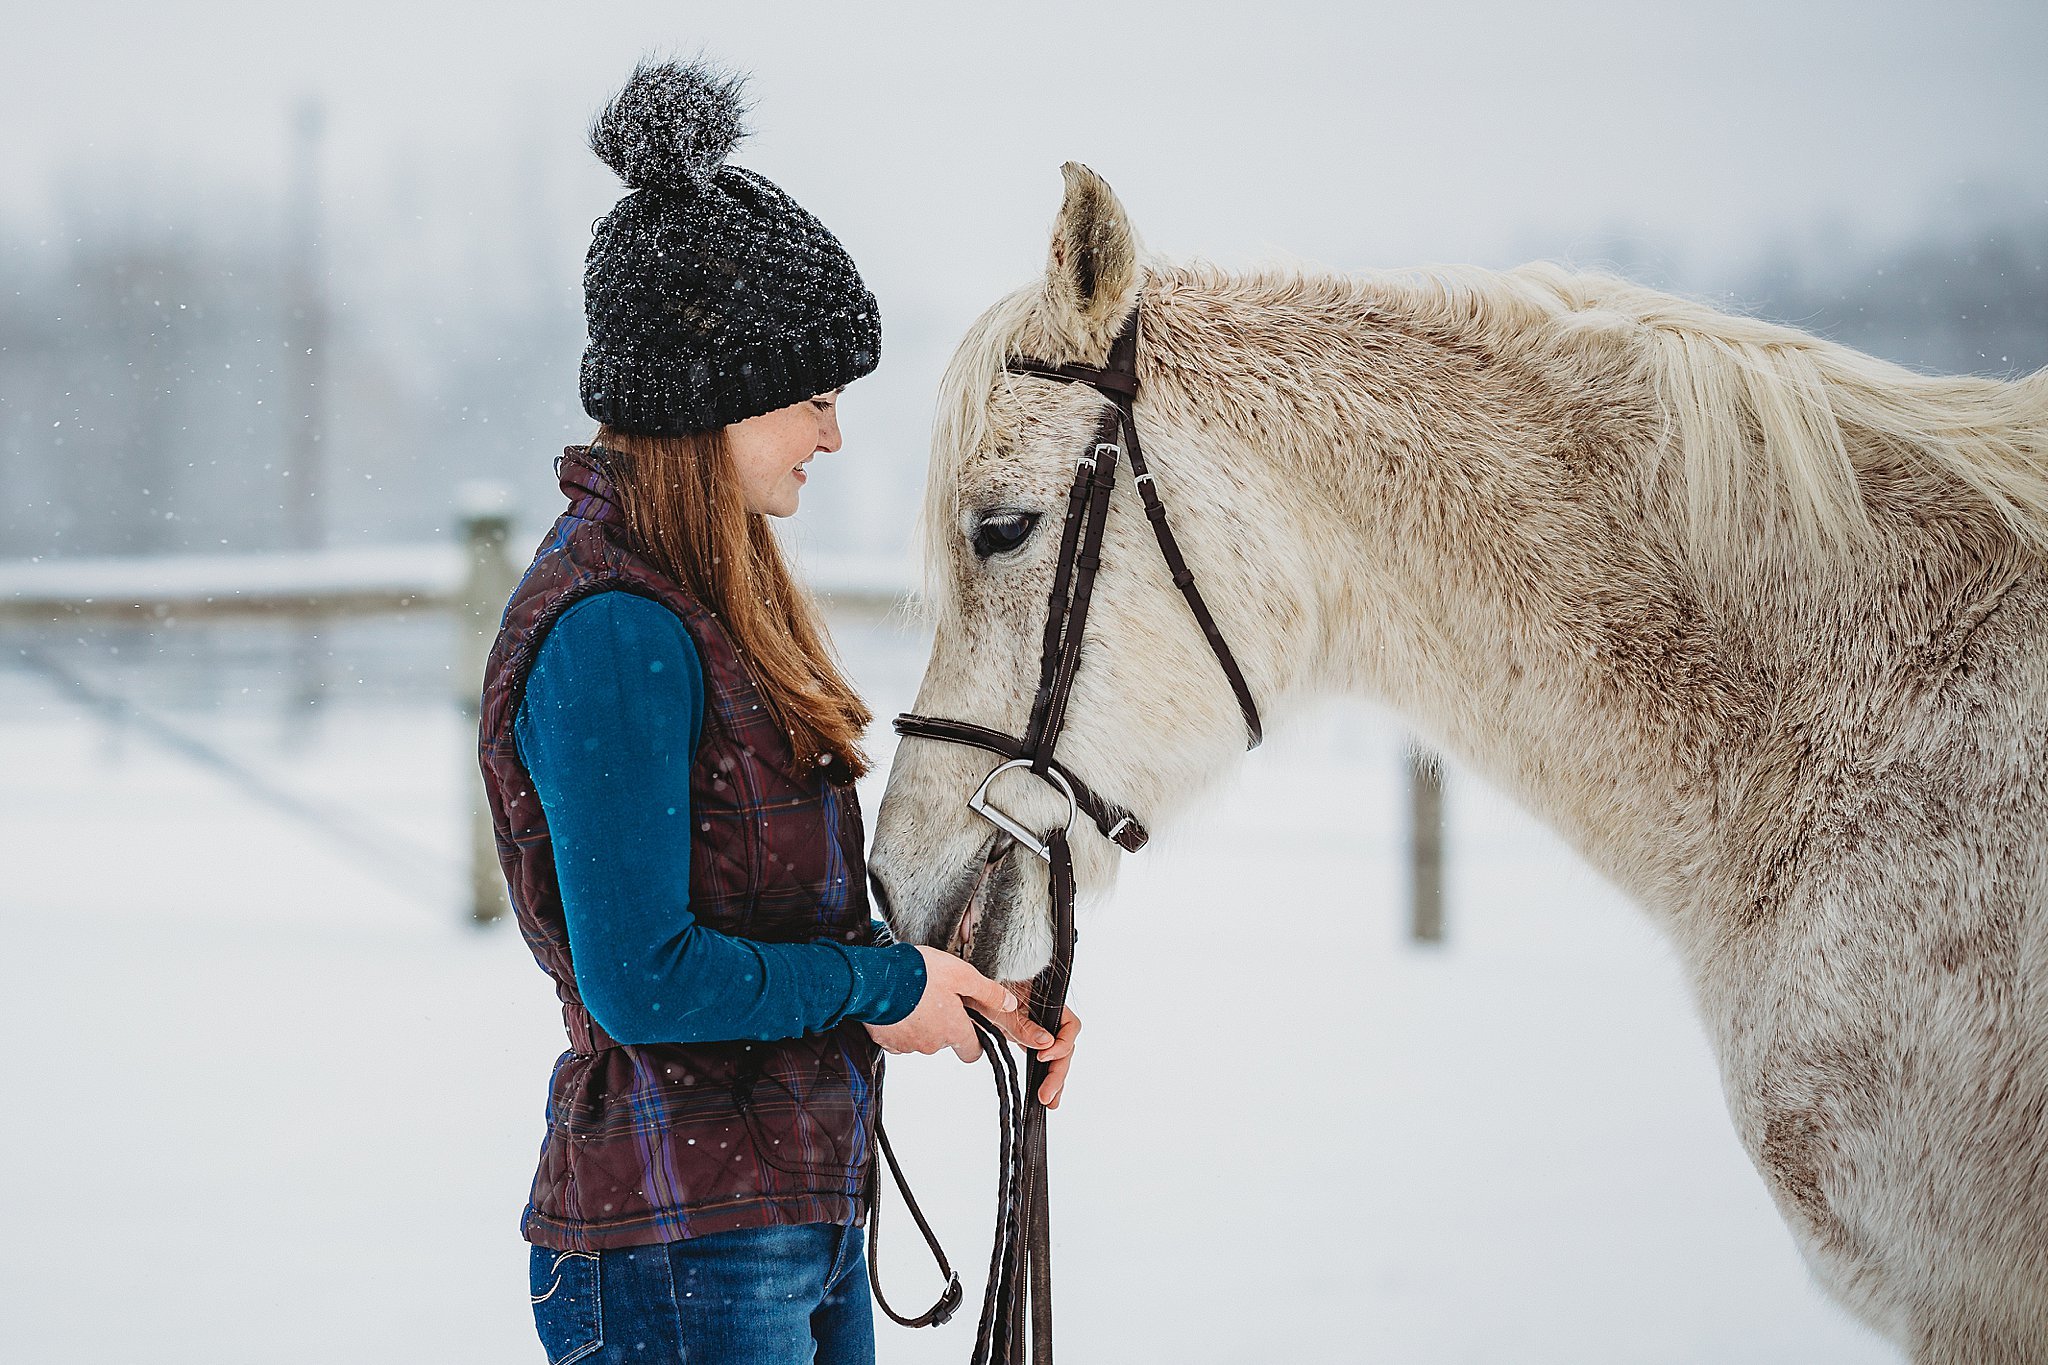 snowy winter senior graduate portrait photographer Lancaster Pennsylvania equine horse